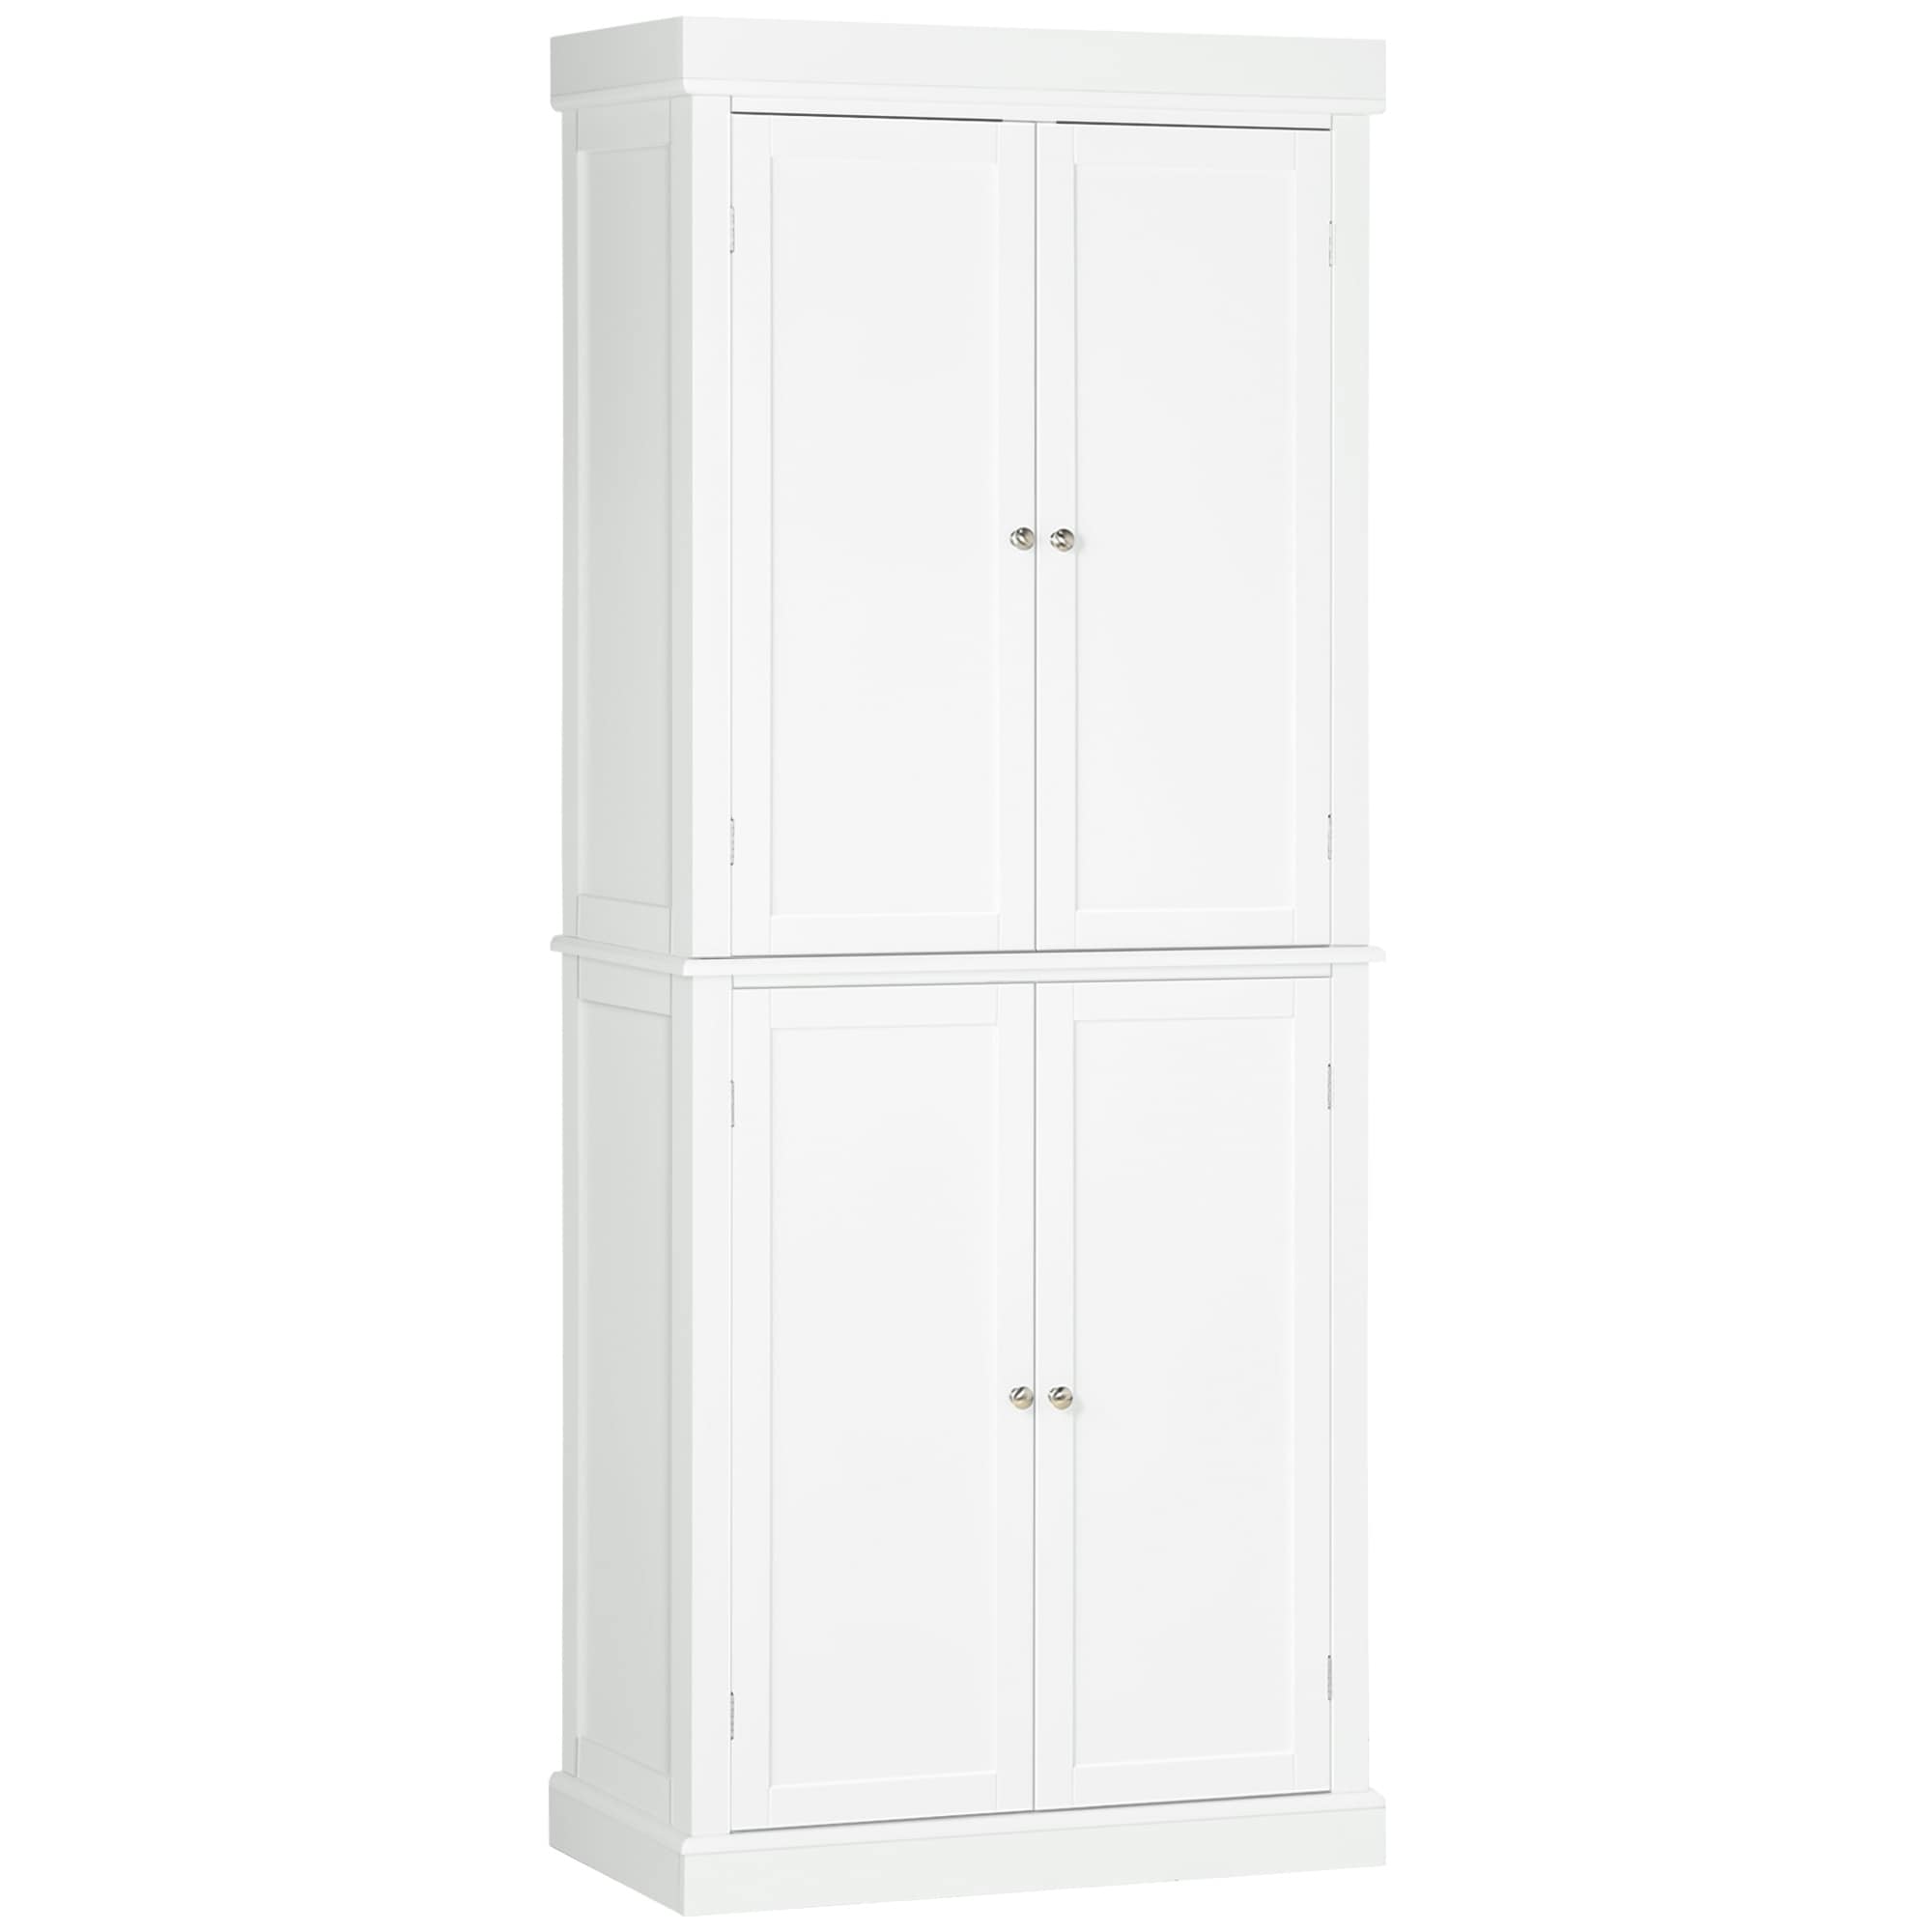 https://ak1.ostkcdn.com/images/products/is/images/direct/dcf958d51d877d7c2298634ca75072ef65ef9f3b/HOMCOM-Freestanding-Modern-4-Door-Kitchen-Pantry%2C-Storage-Cabinet-Organizer-with-6-Tier-Shelves%2C-and-4-Adjustable-Shelves%2C-Black.jpg